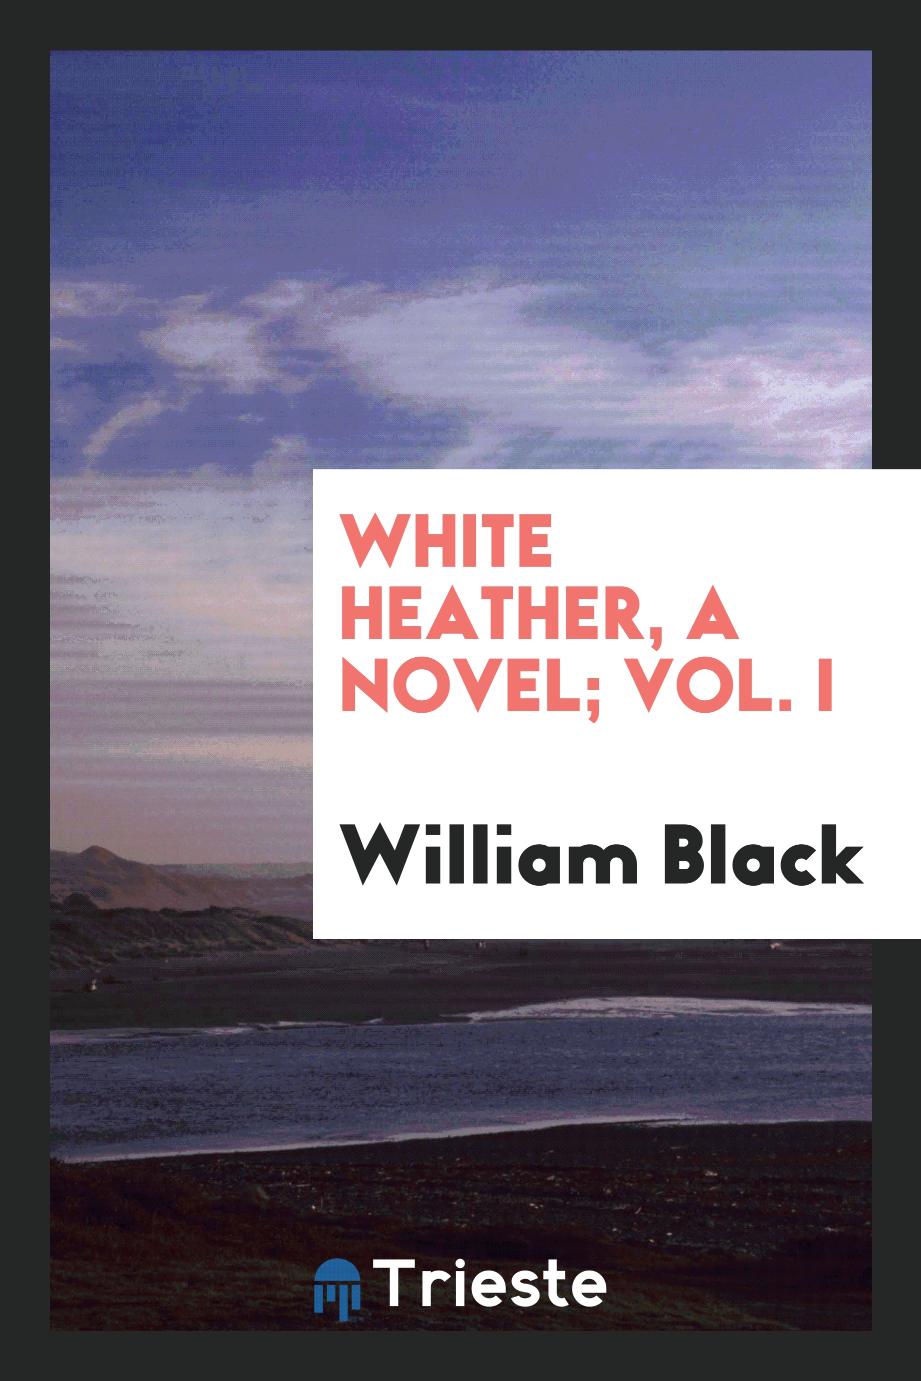 White heather, a novel; Vol. I